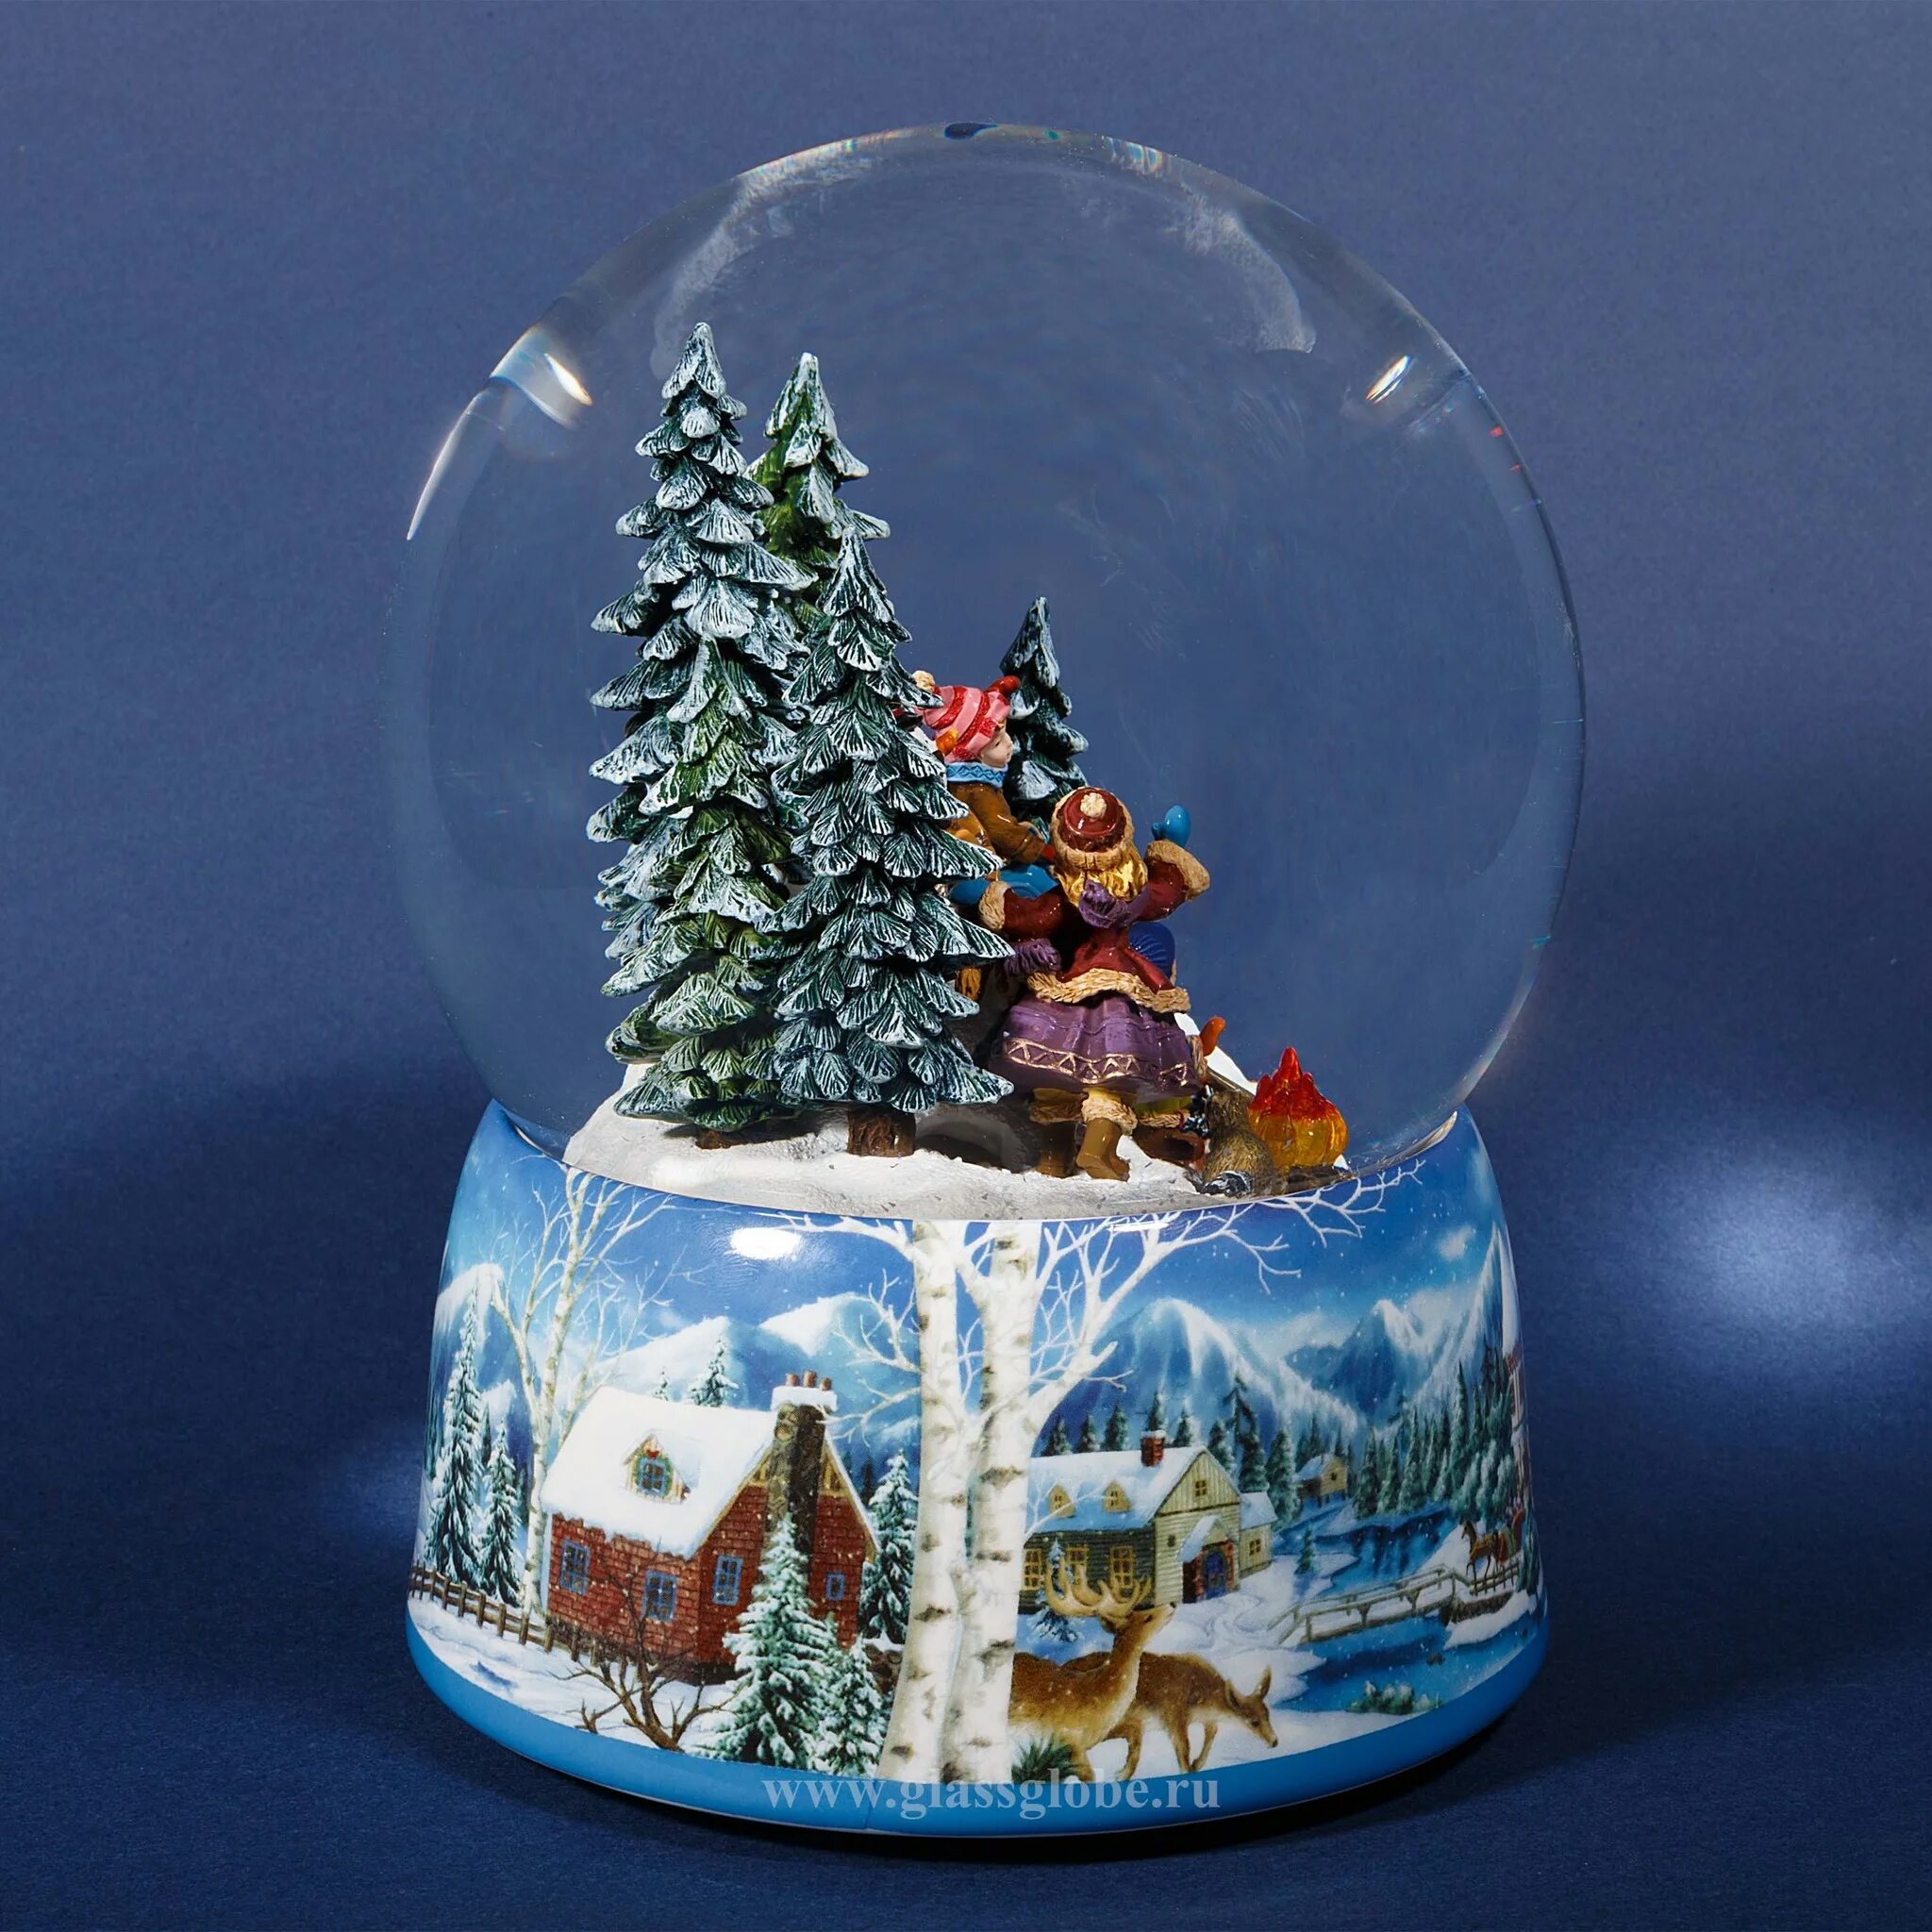 Стеклянный шар снег. Снежный шар Toys 277c-995. Стеклянный шар со снегом. Новогодний стеклянный шар. Новогодние стеклянные шары со снегом.